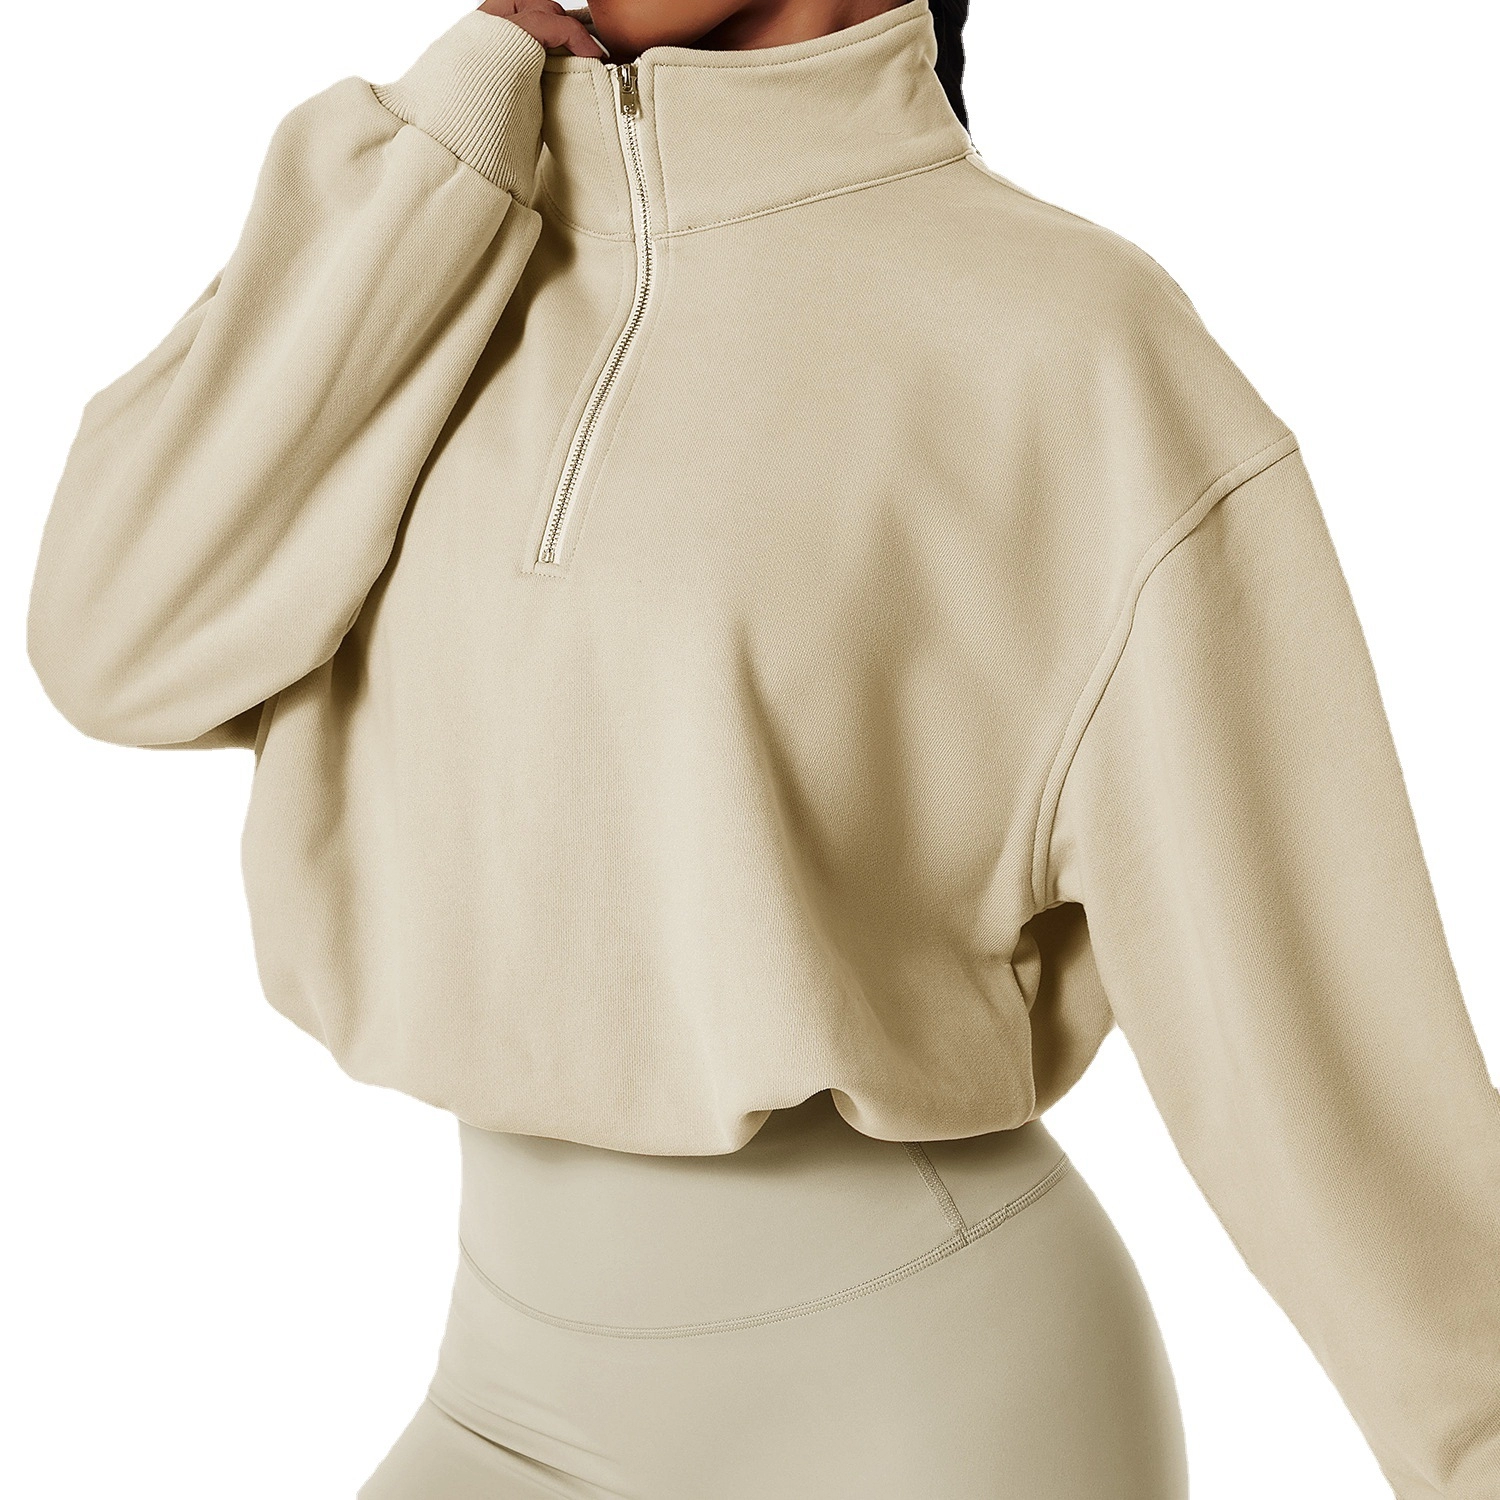 Pullover high-neck fitness sports sweater women's outdoor running drawstring zipper loose long sleeved sweatshirt